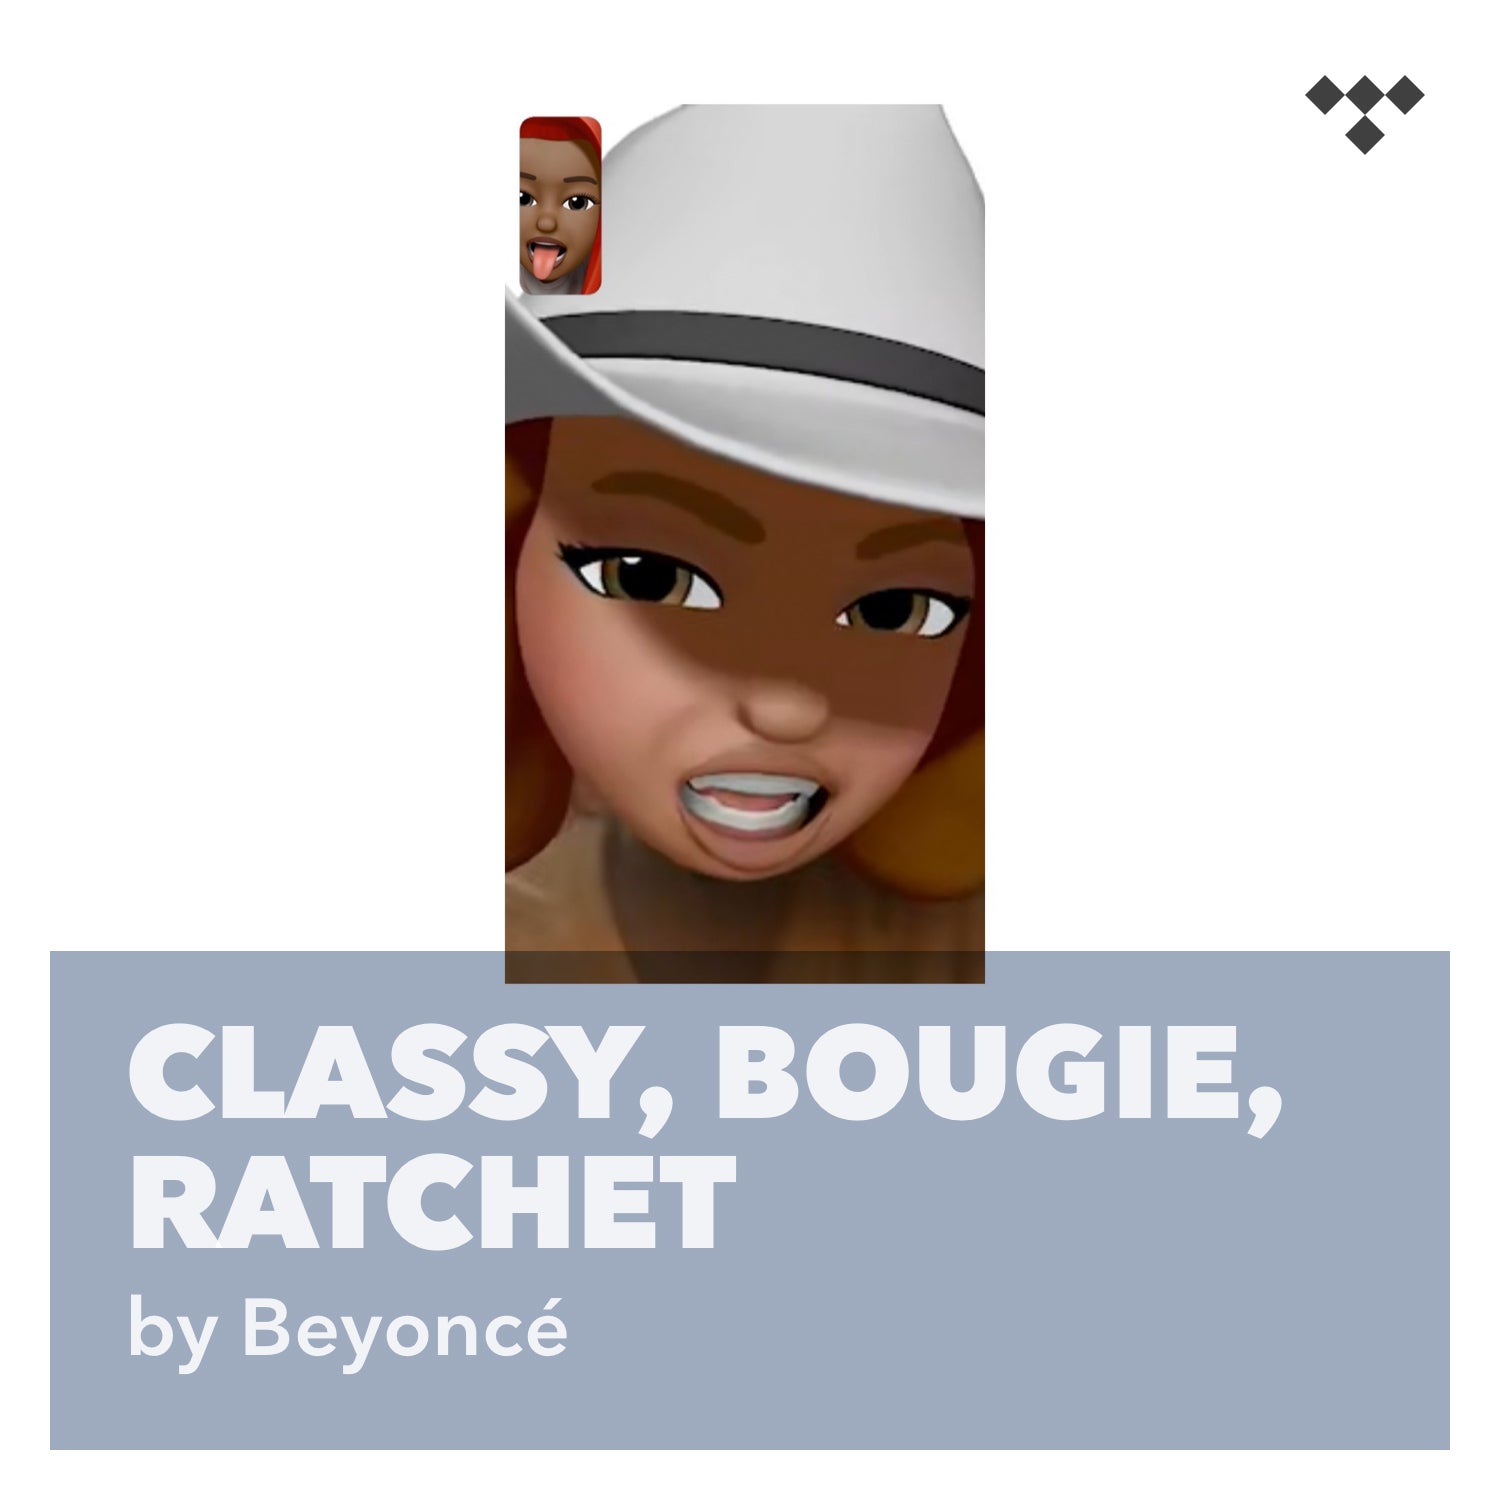 Beyoncé Drops ‘The Classy, Bougie, Rachet’ Playlist on TIDAL